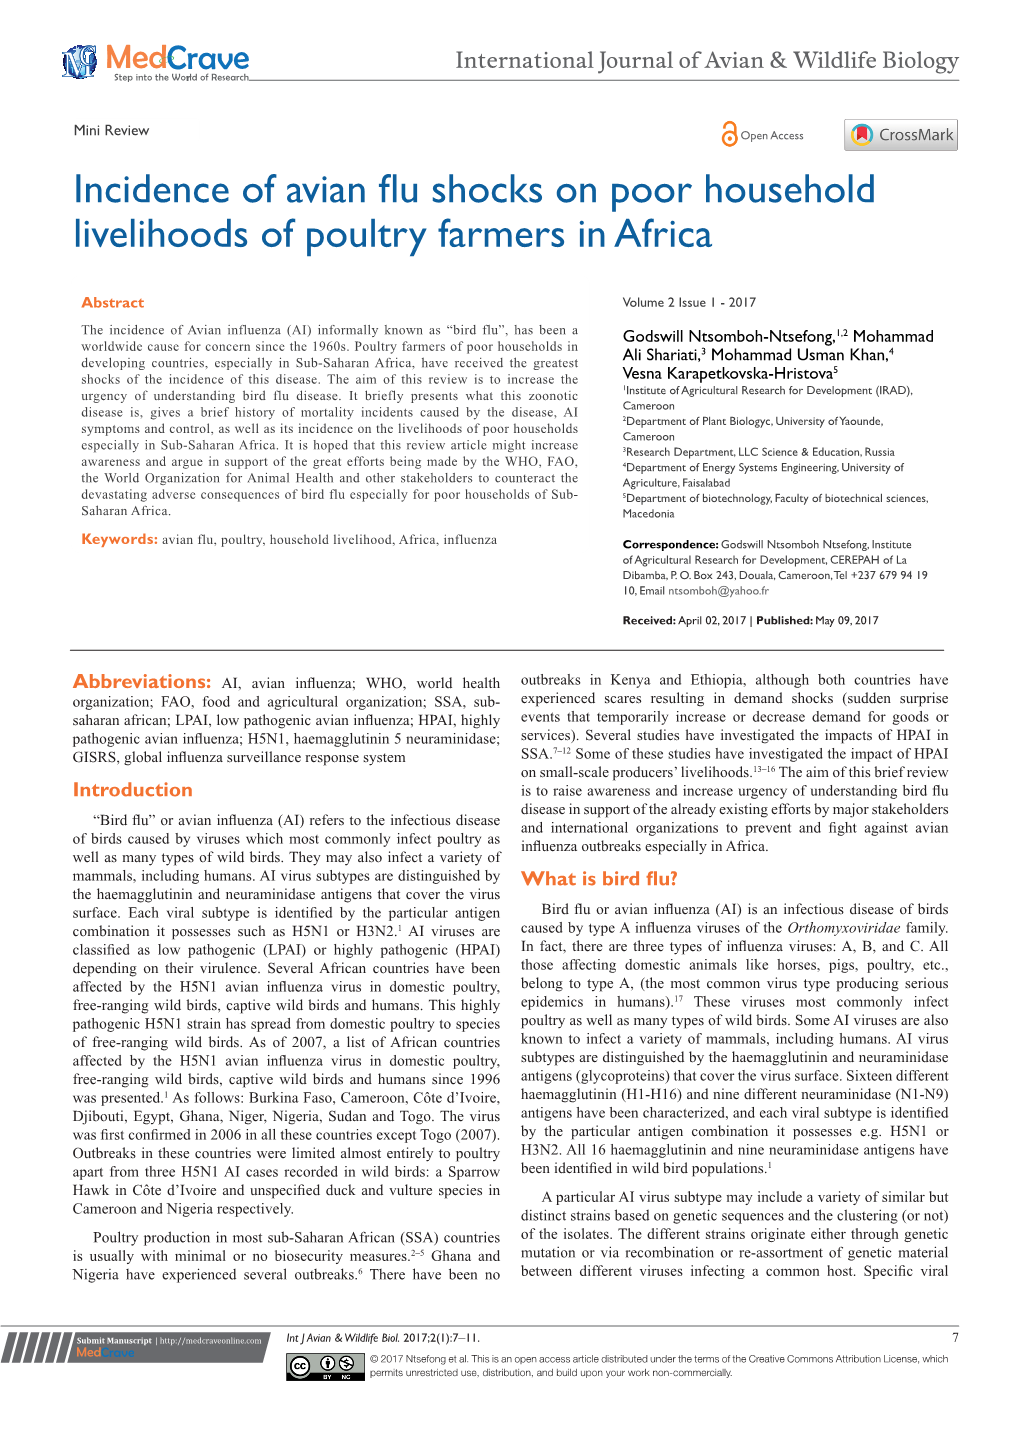 Incidence of Avian Flu Shocks on Poor Household Livelihoods of Poultry Farmers in Africa